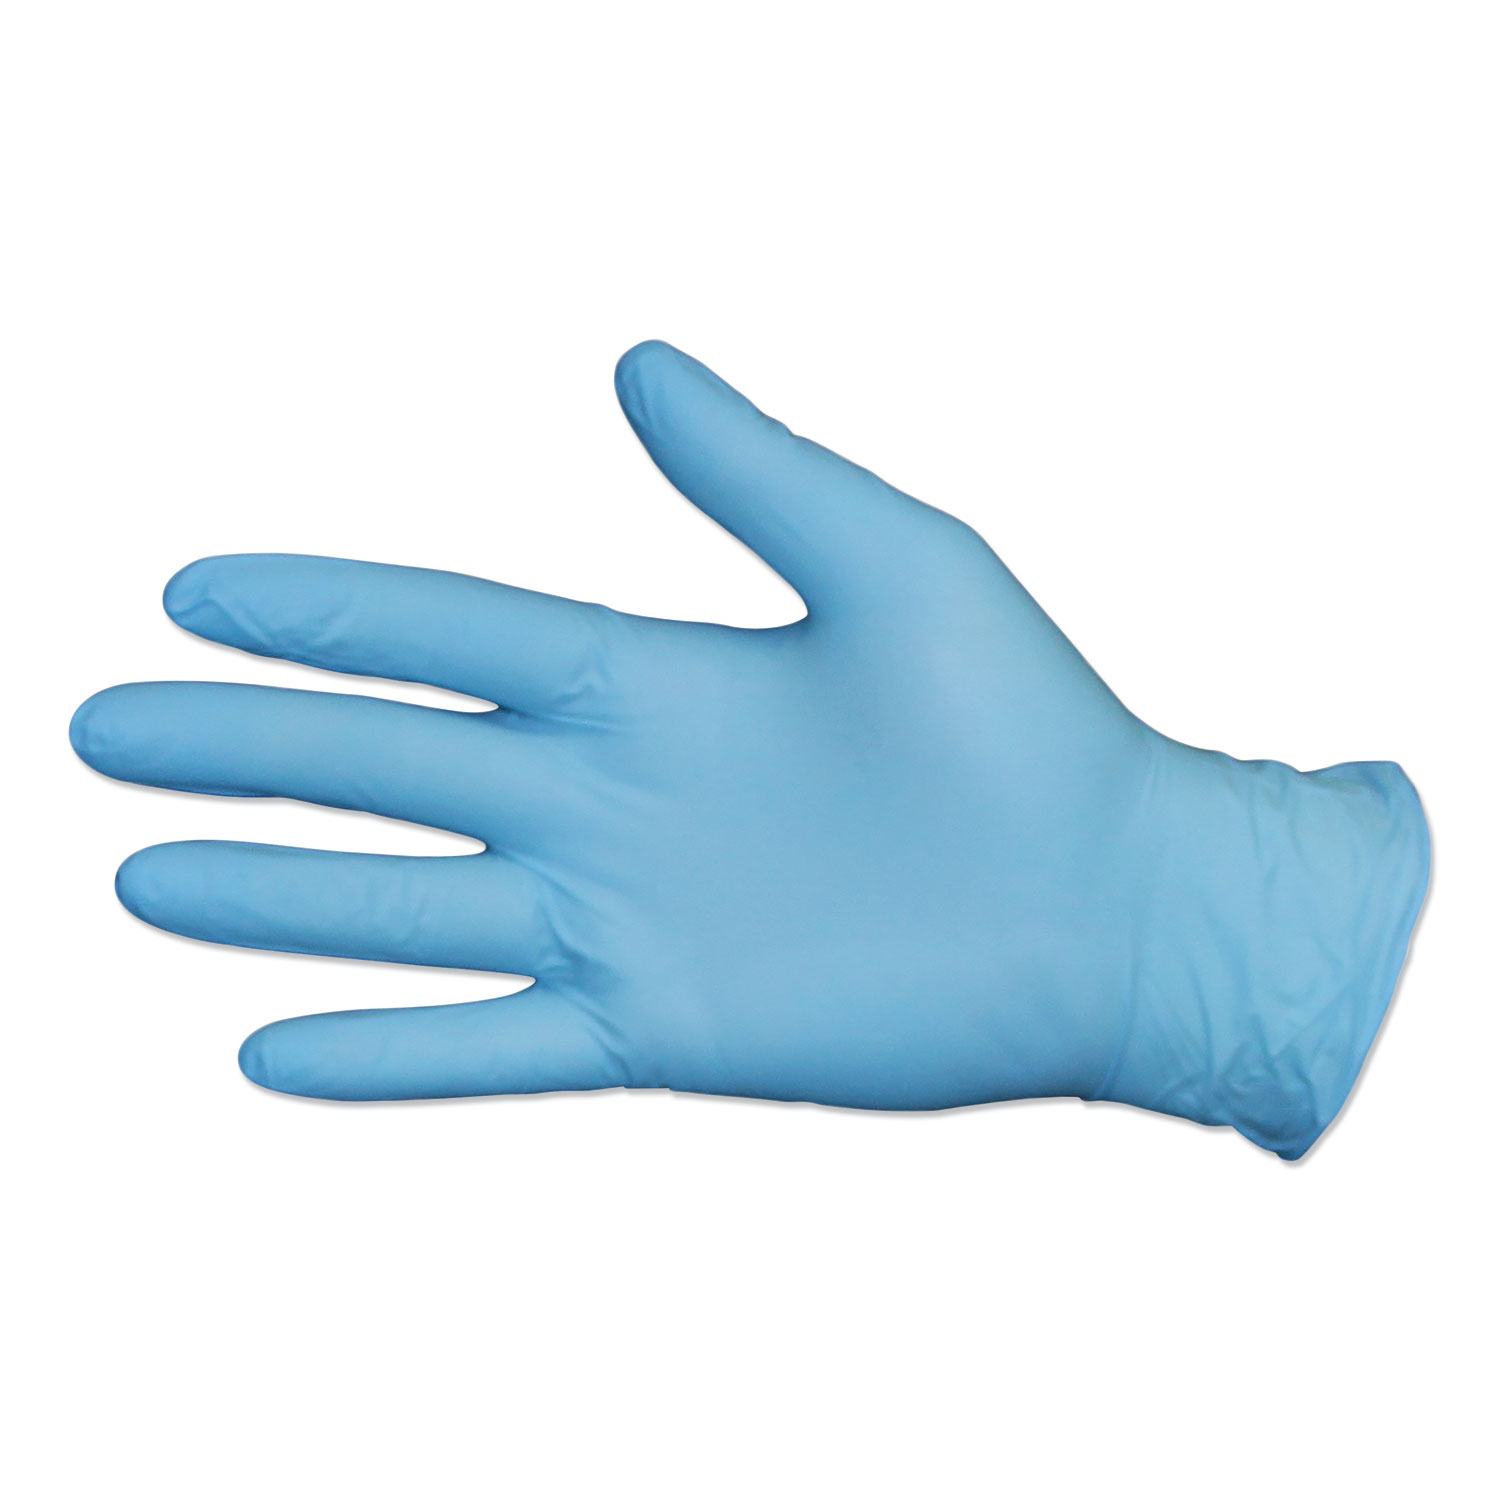  Impact 8644XL Pro-Guard Disposable Powder-Free General-Purpose Nitrile Gloves, Blue, X-Large, 100/Box (IMP8644XLBX) 